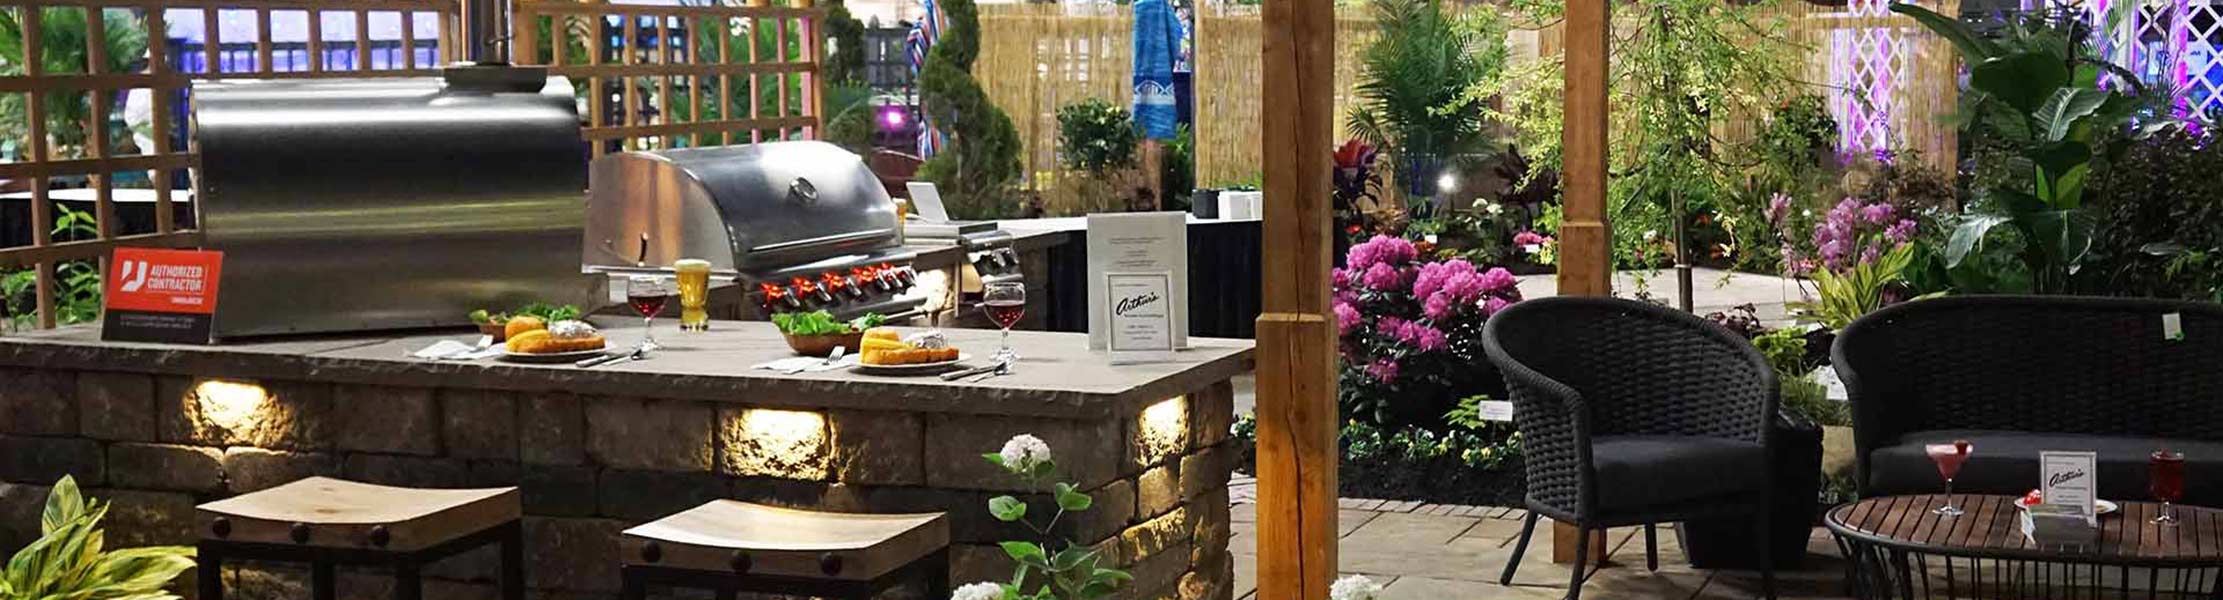 grill patio set up at landscape show